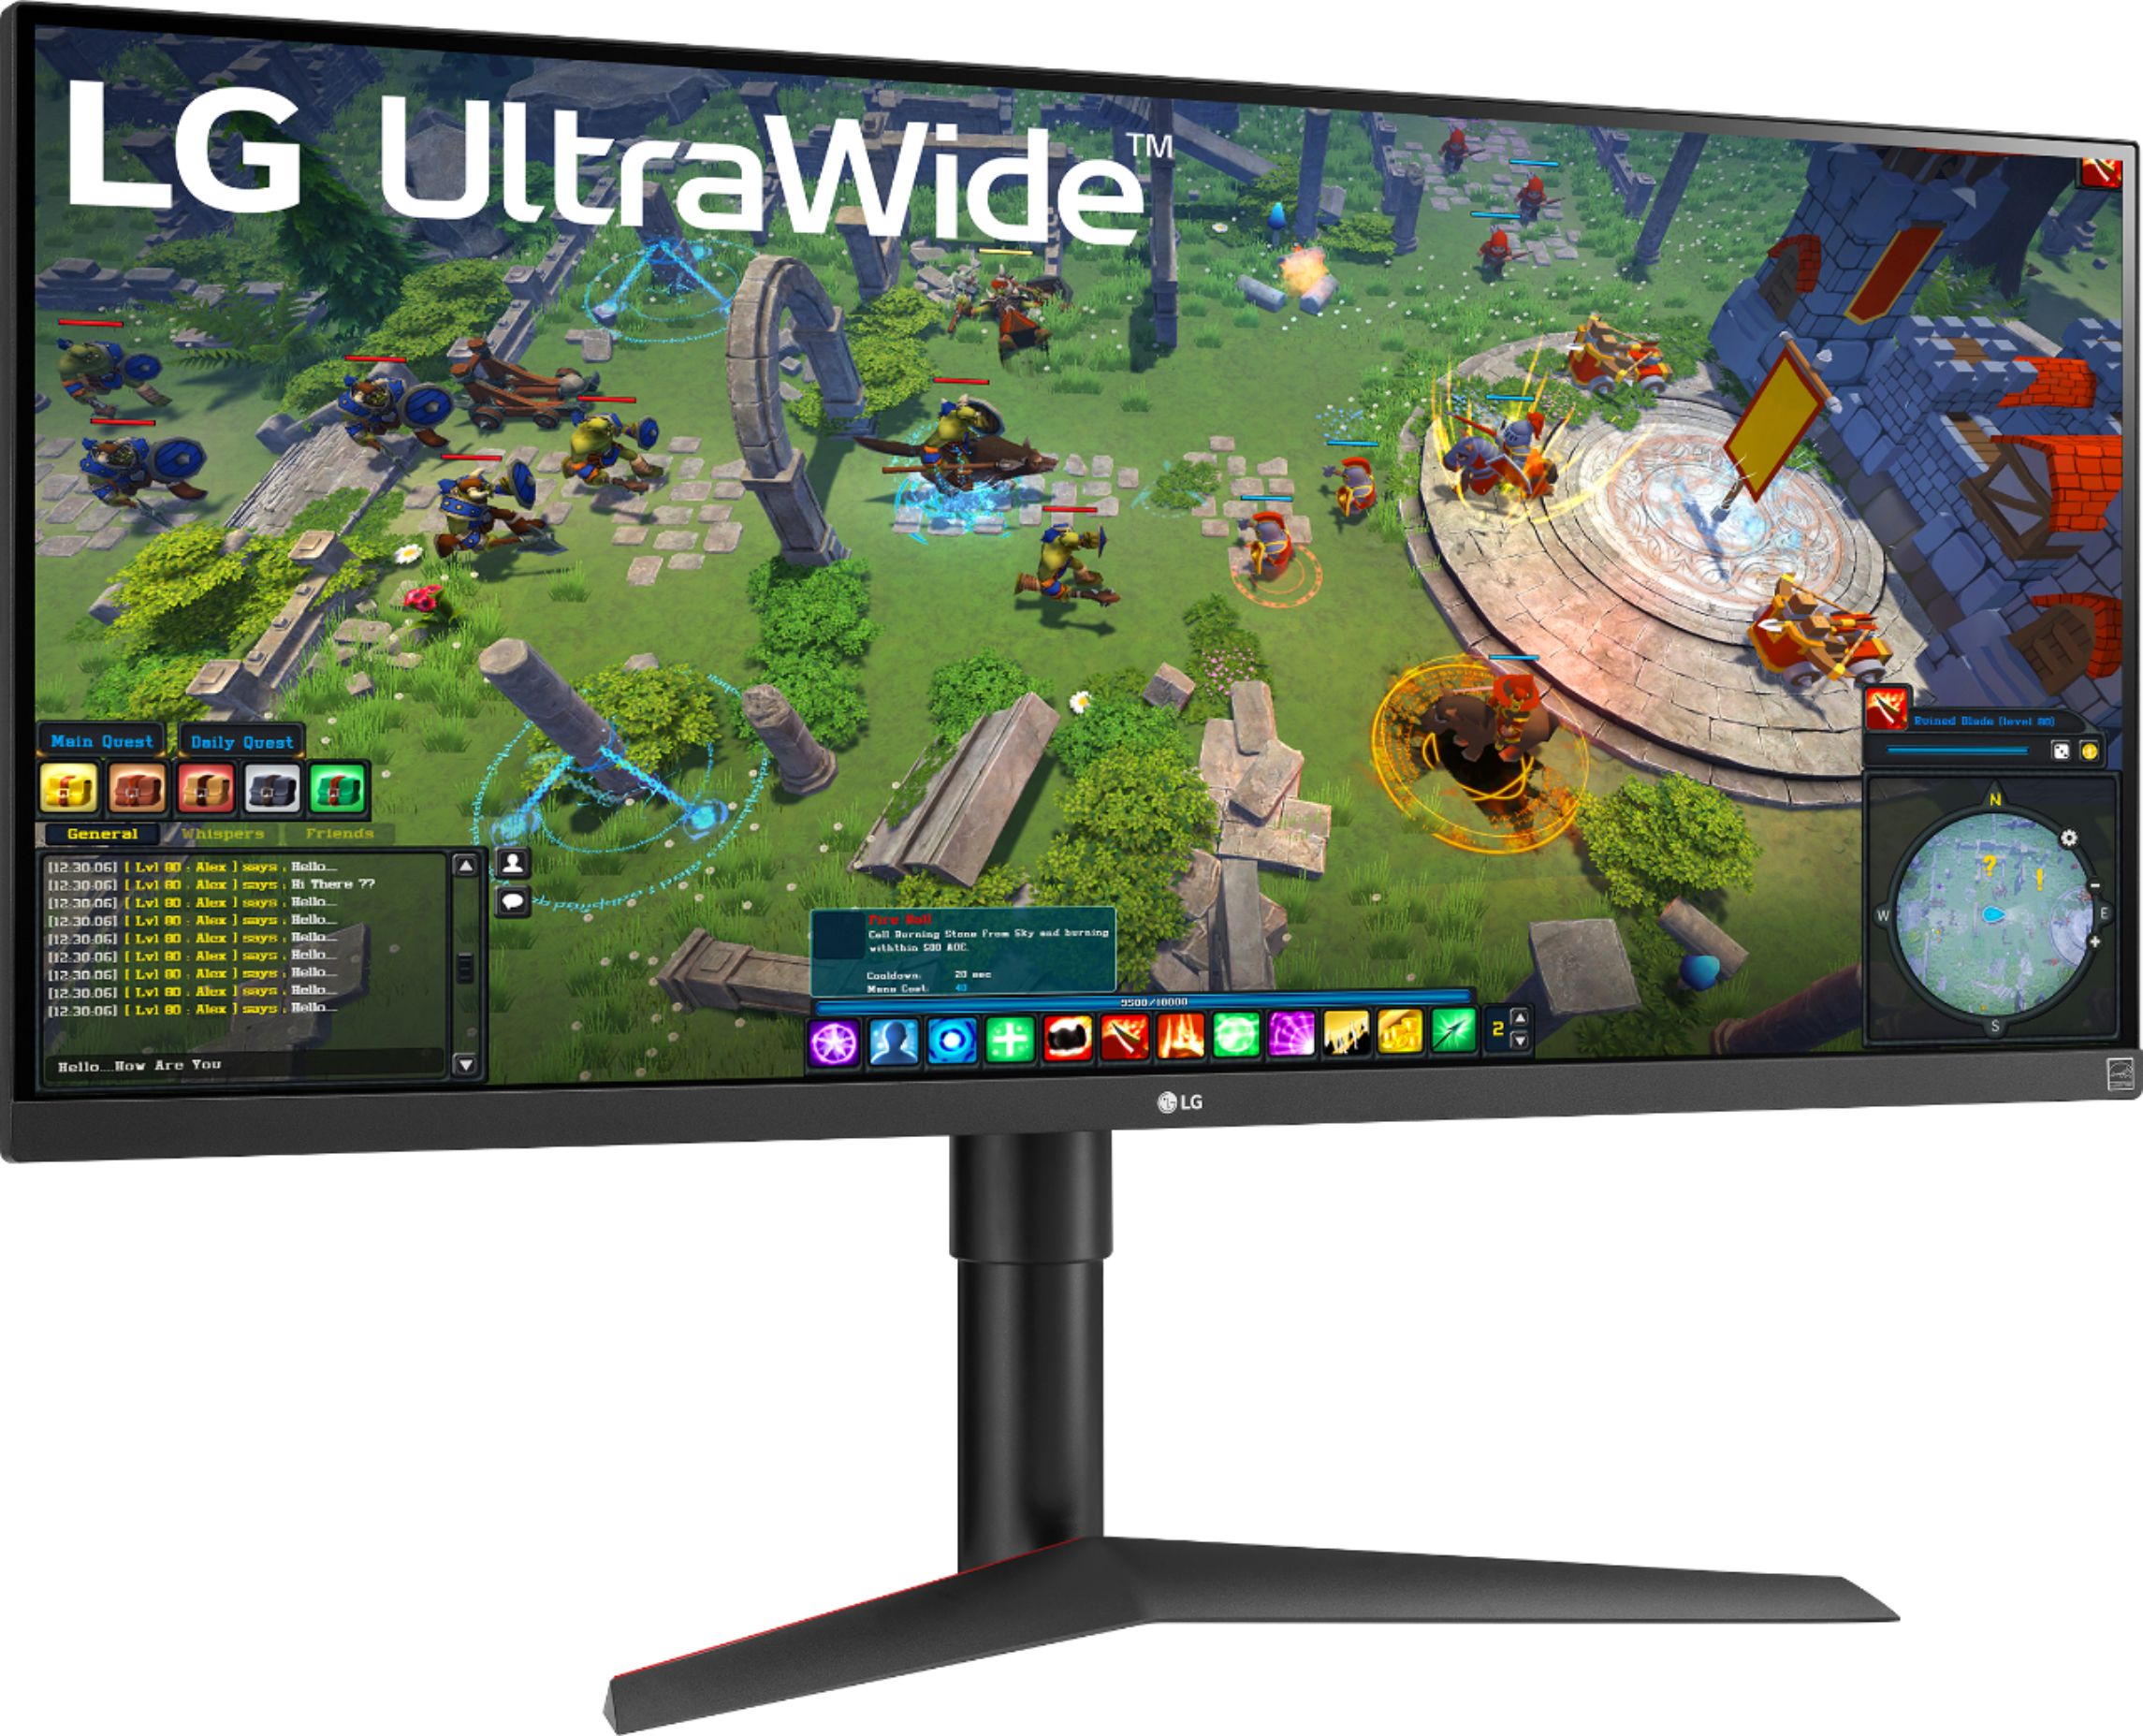 Angle View: LG - 34” UltraWide FHD HDR FreeSync Monitor (USB) - Black